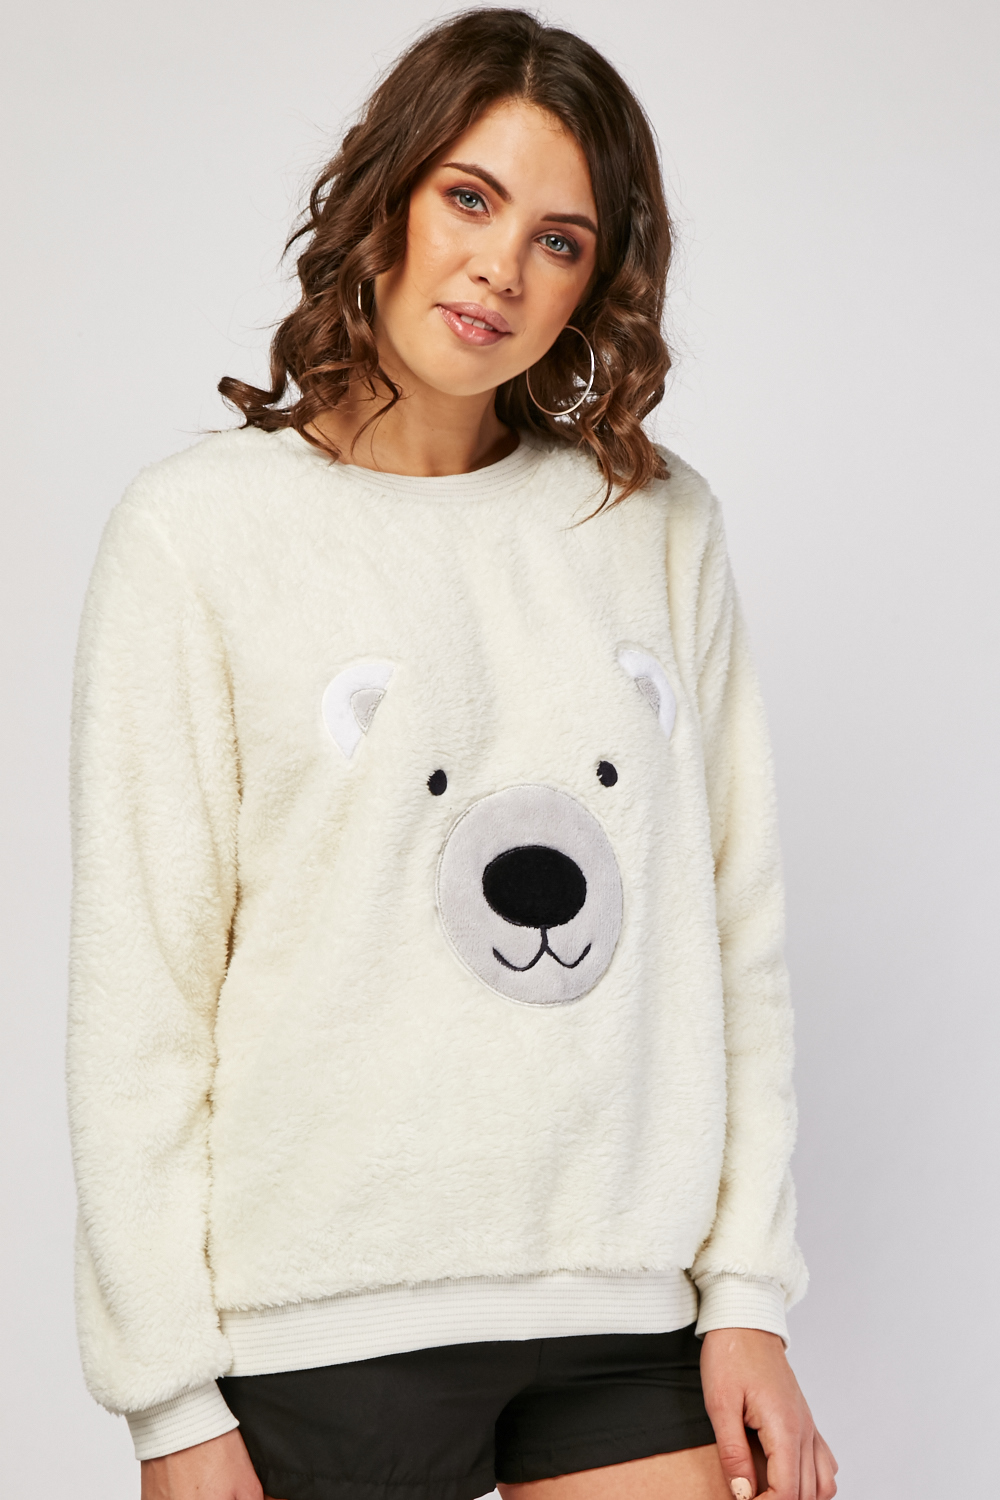 Fluffy Polar Bear Fleece Top - Just $7